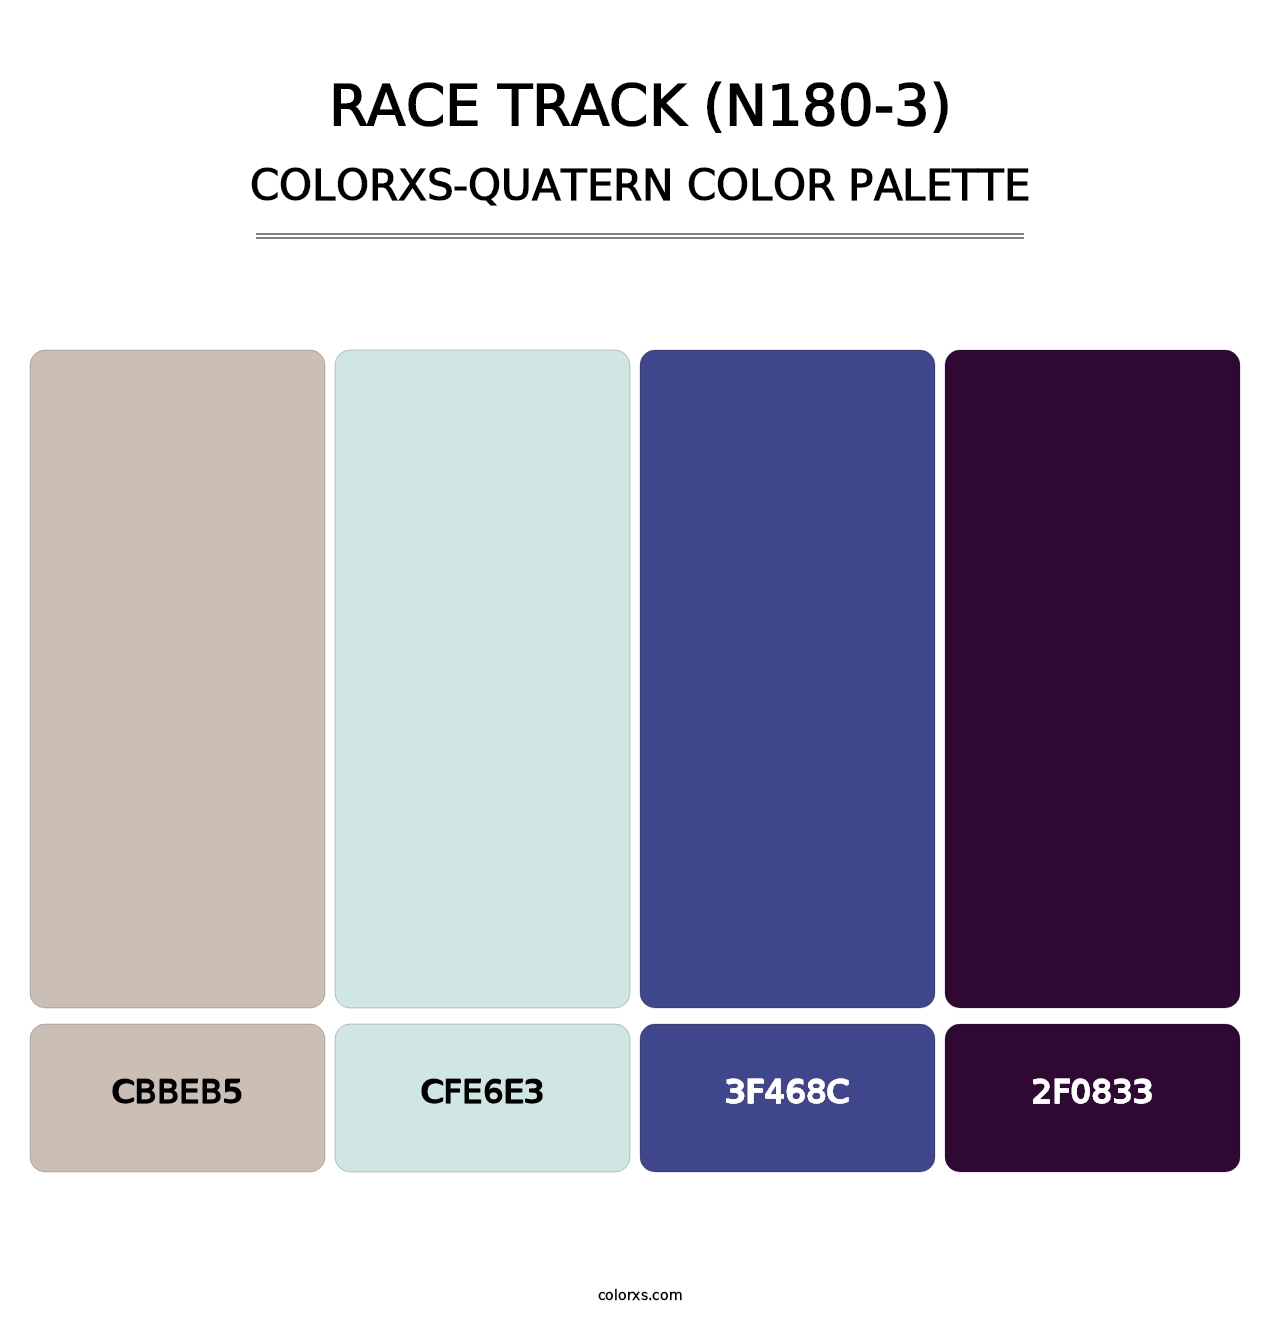 Race Track (N180-3) - Colorxs Quatern Palette